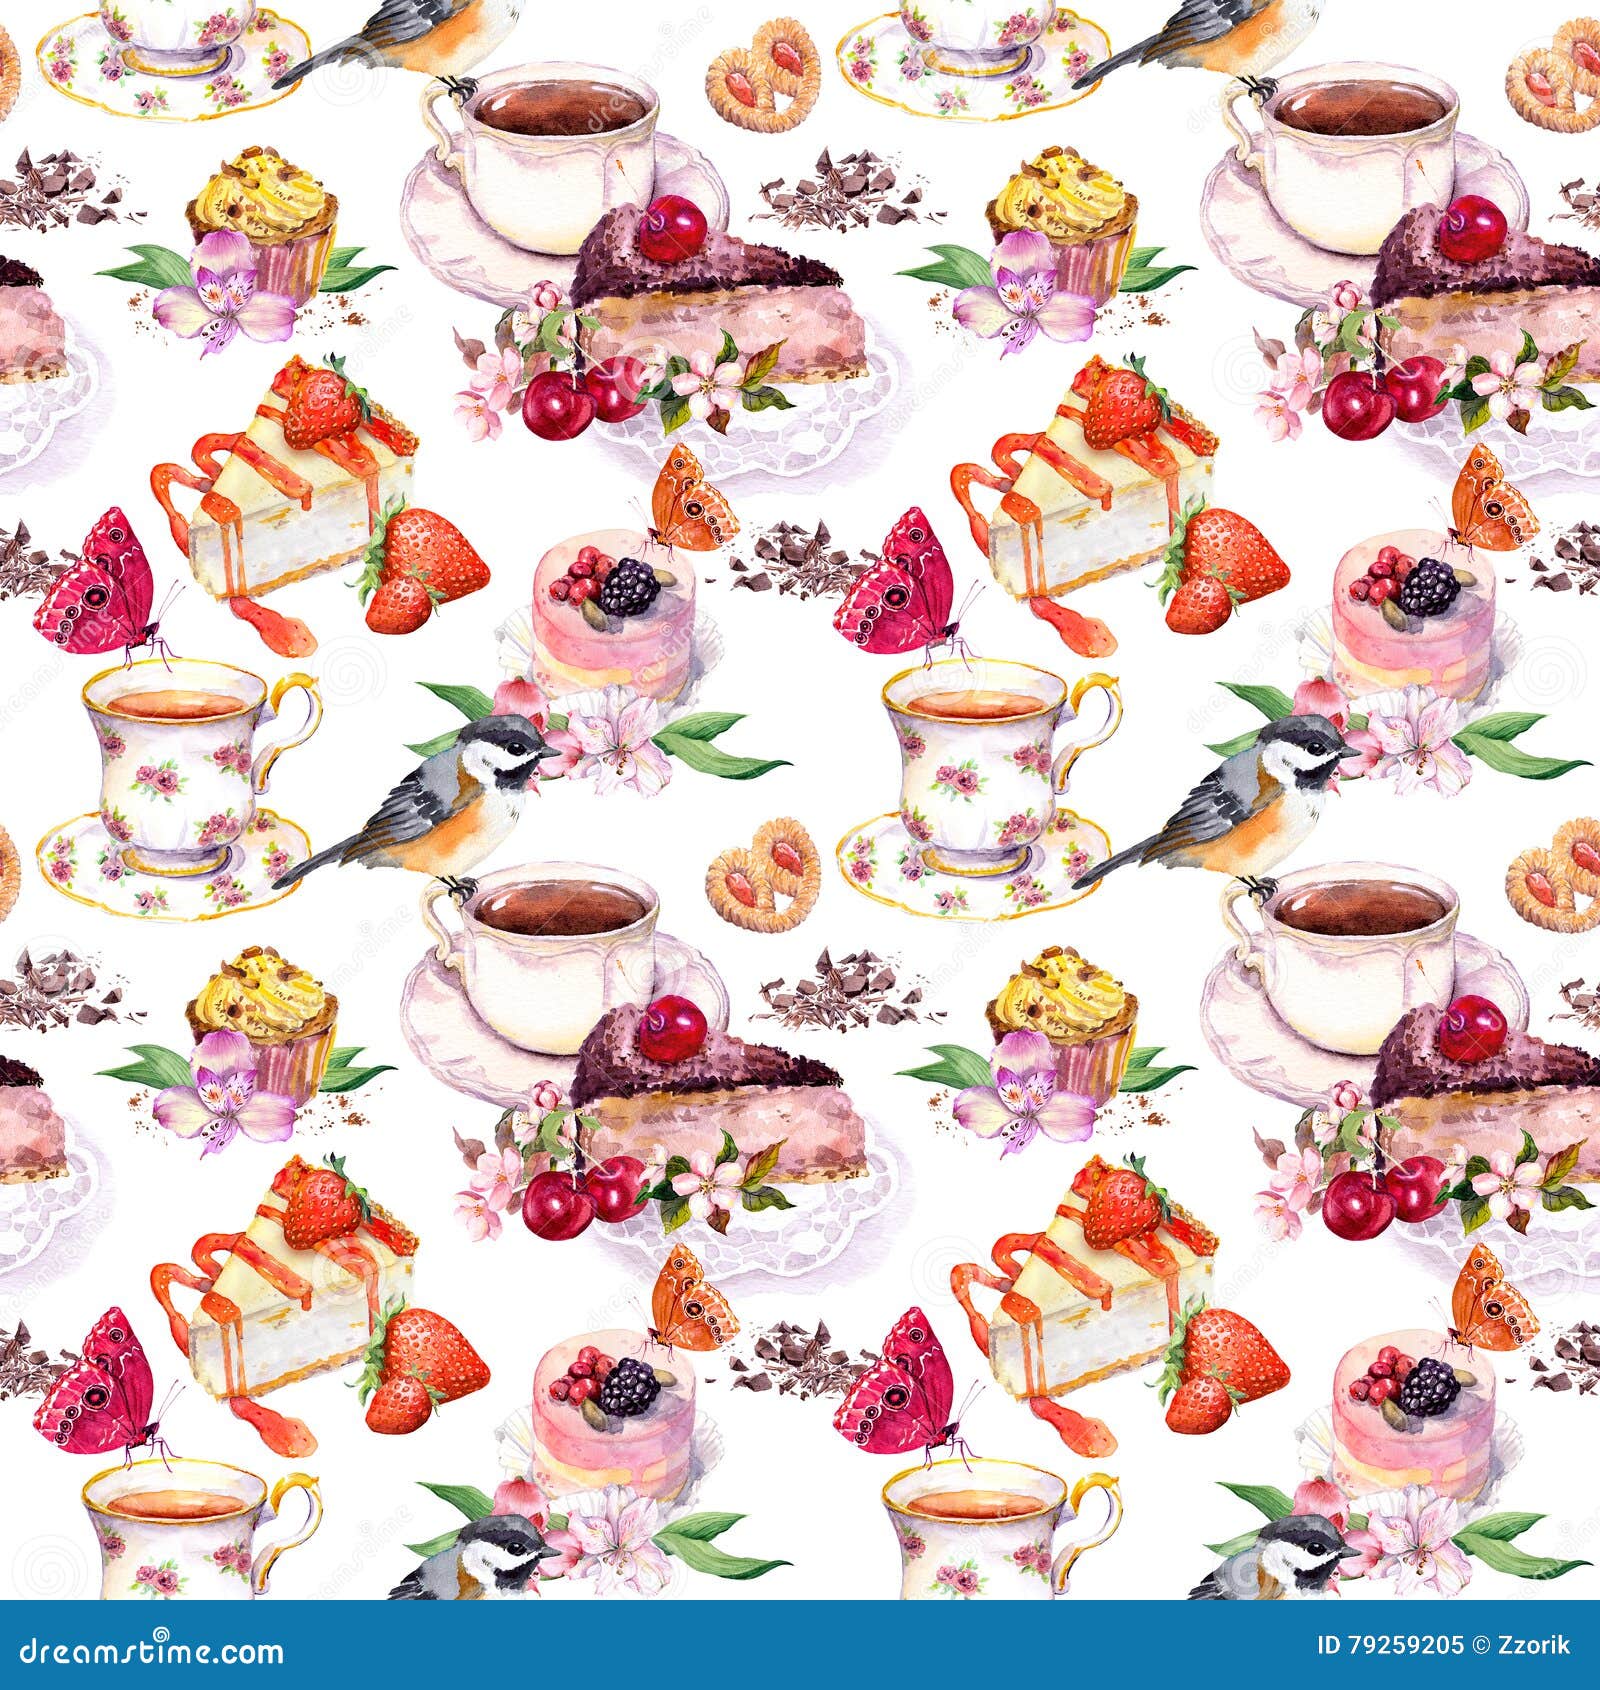 tea pattern - flowers, teacup, cakes, bird. food watercolor. seamless background